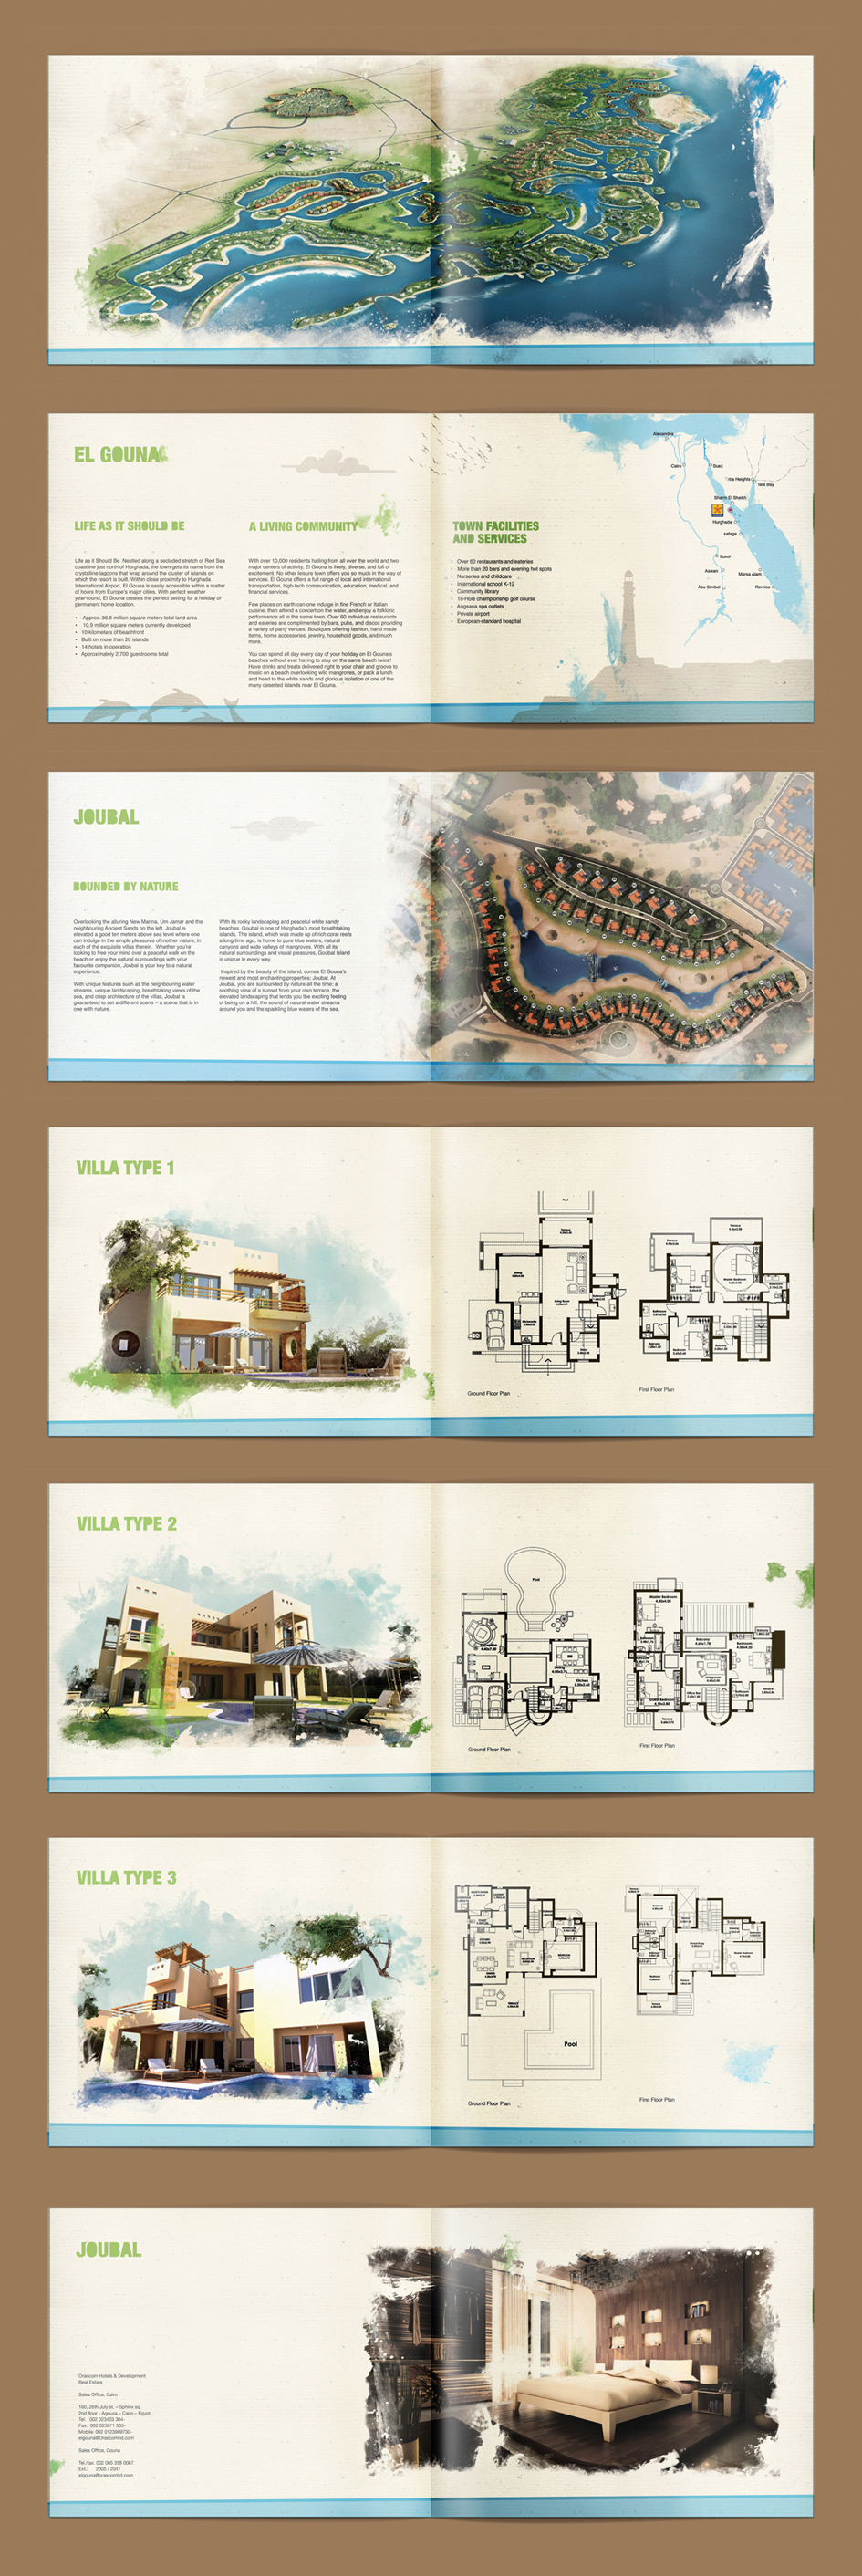 brochure leaflet Gouna development orascom hurghada egypt real estate corporate tourism touristic village Project Villa